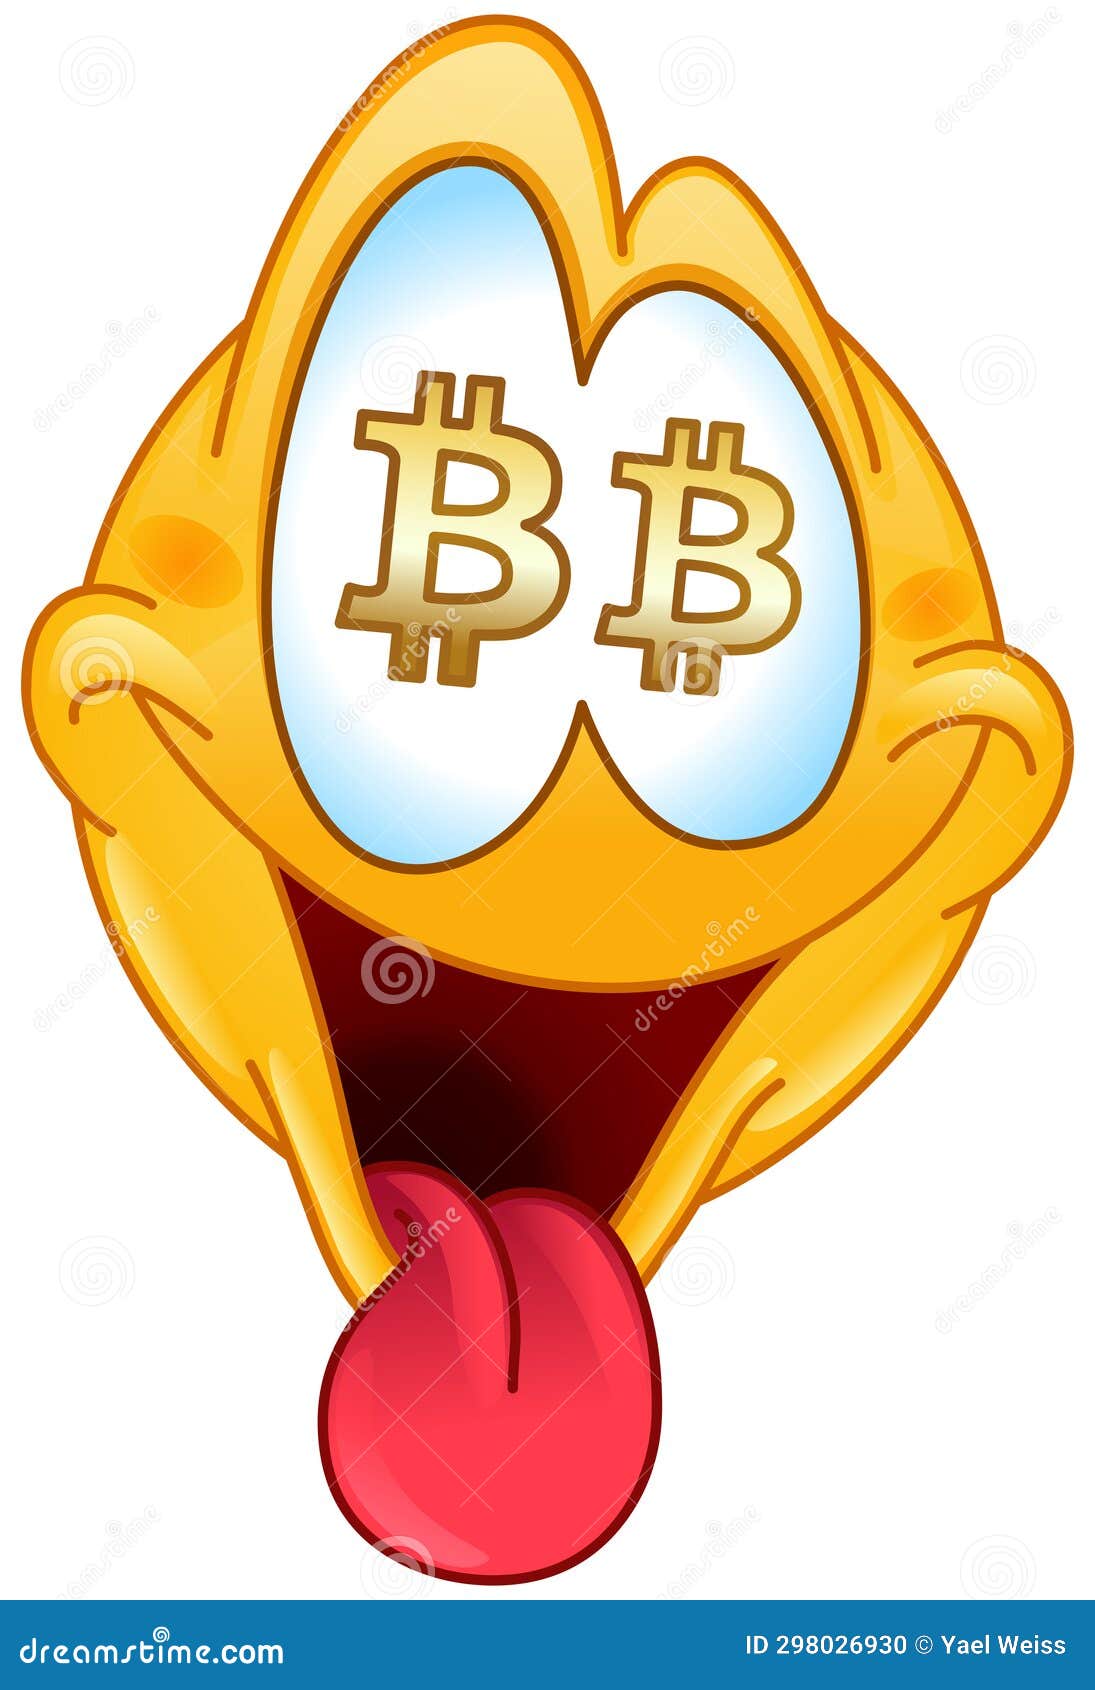 Study Reveals Emoji Sentiments' Impact on Crypto Markets - bitcoinhelp.fun